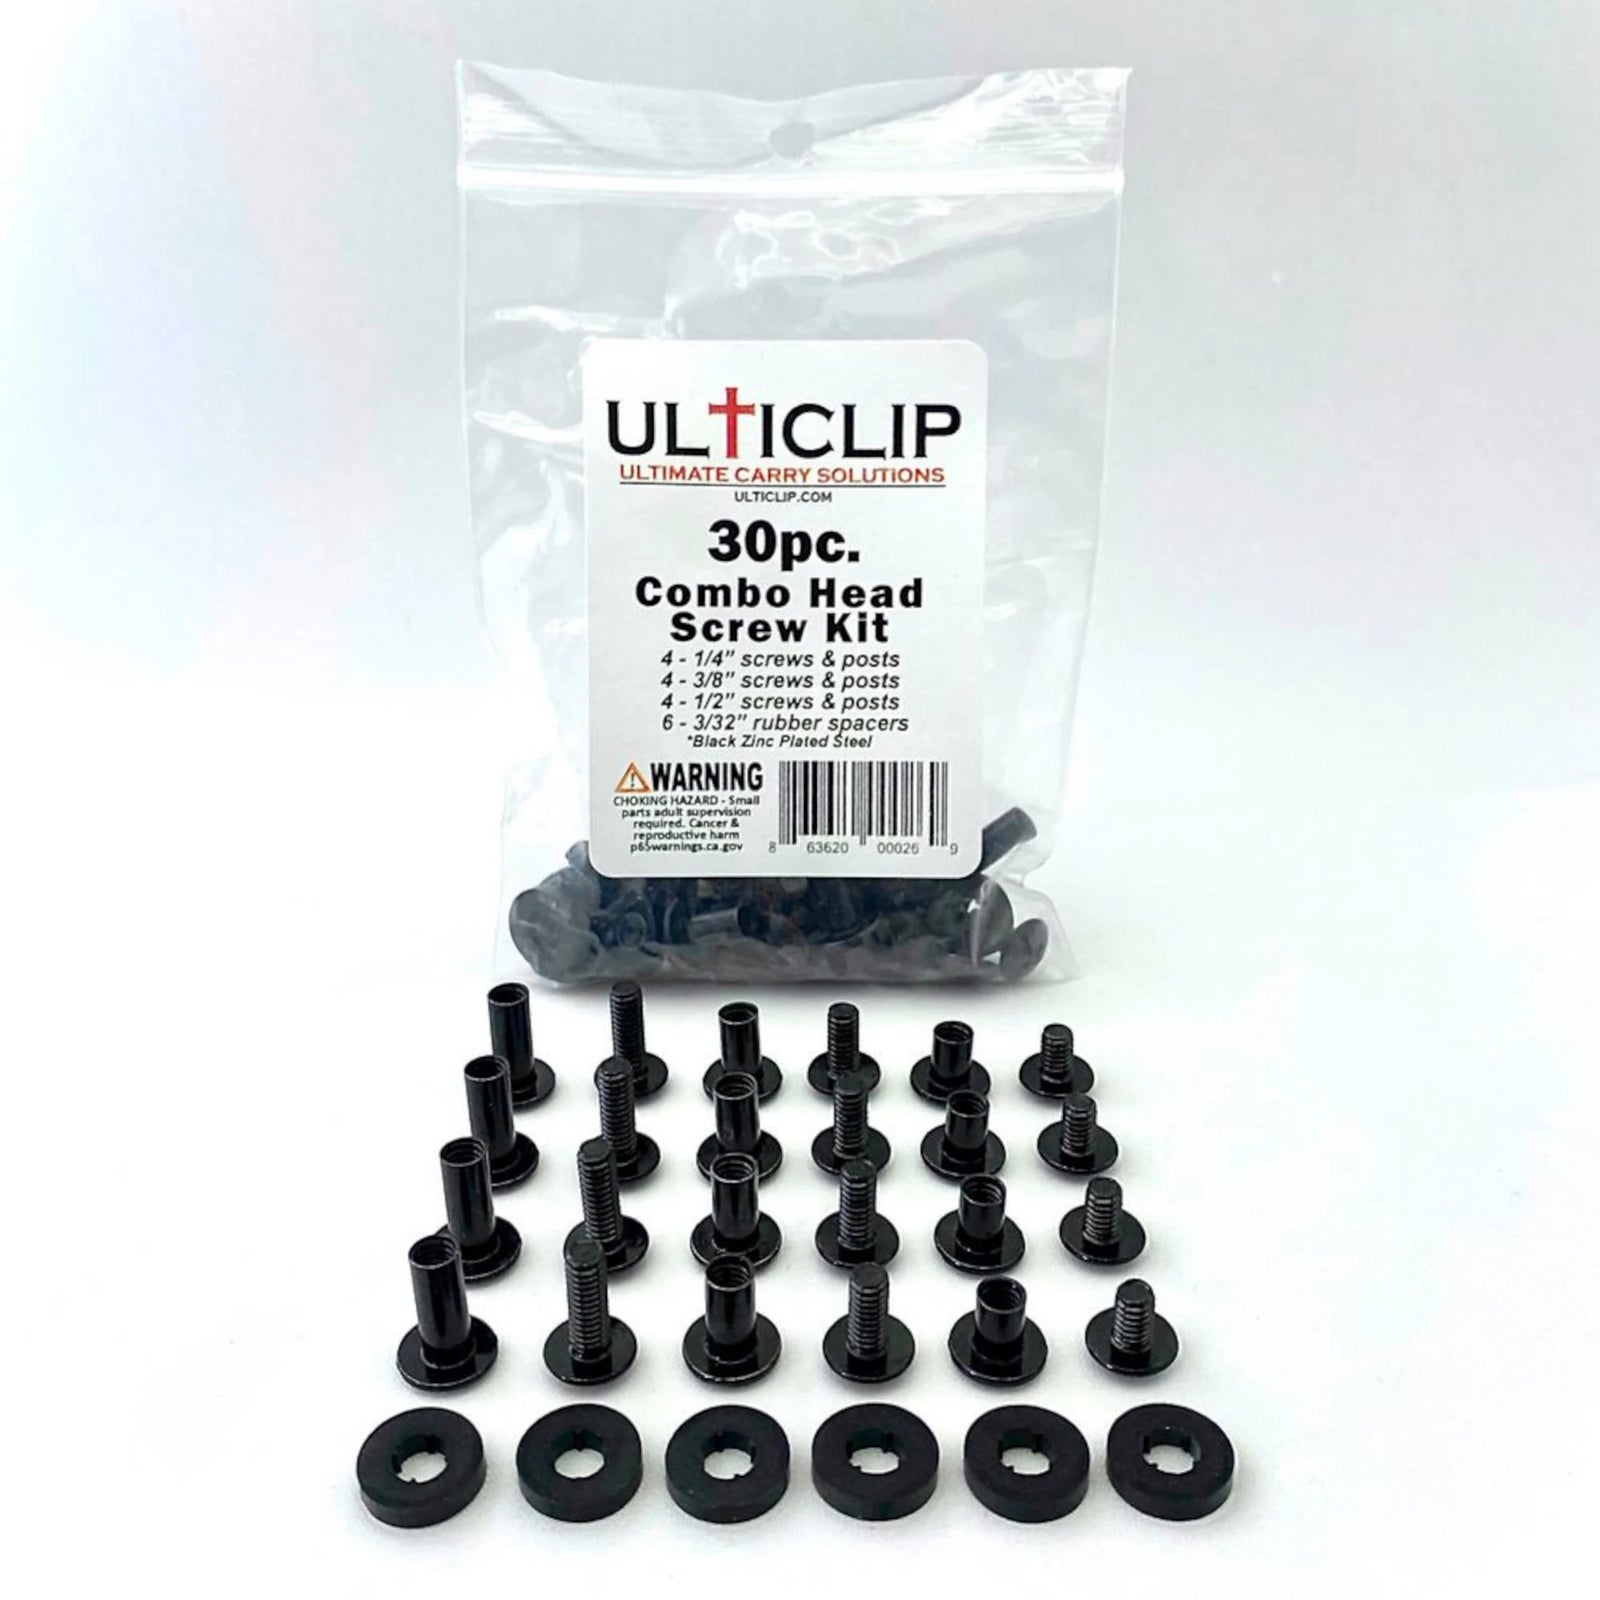 uniclip 30 pc. Combo Head Screw Kit